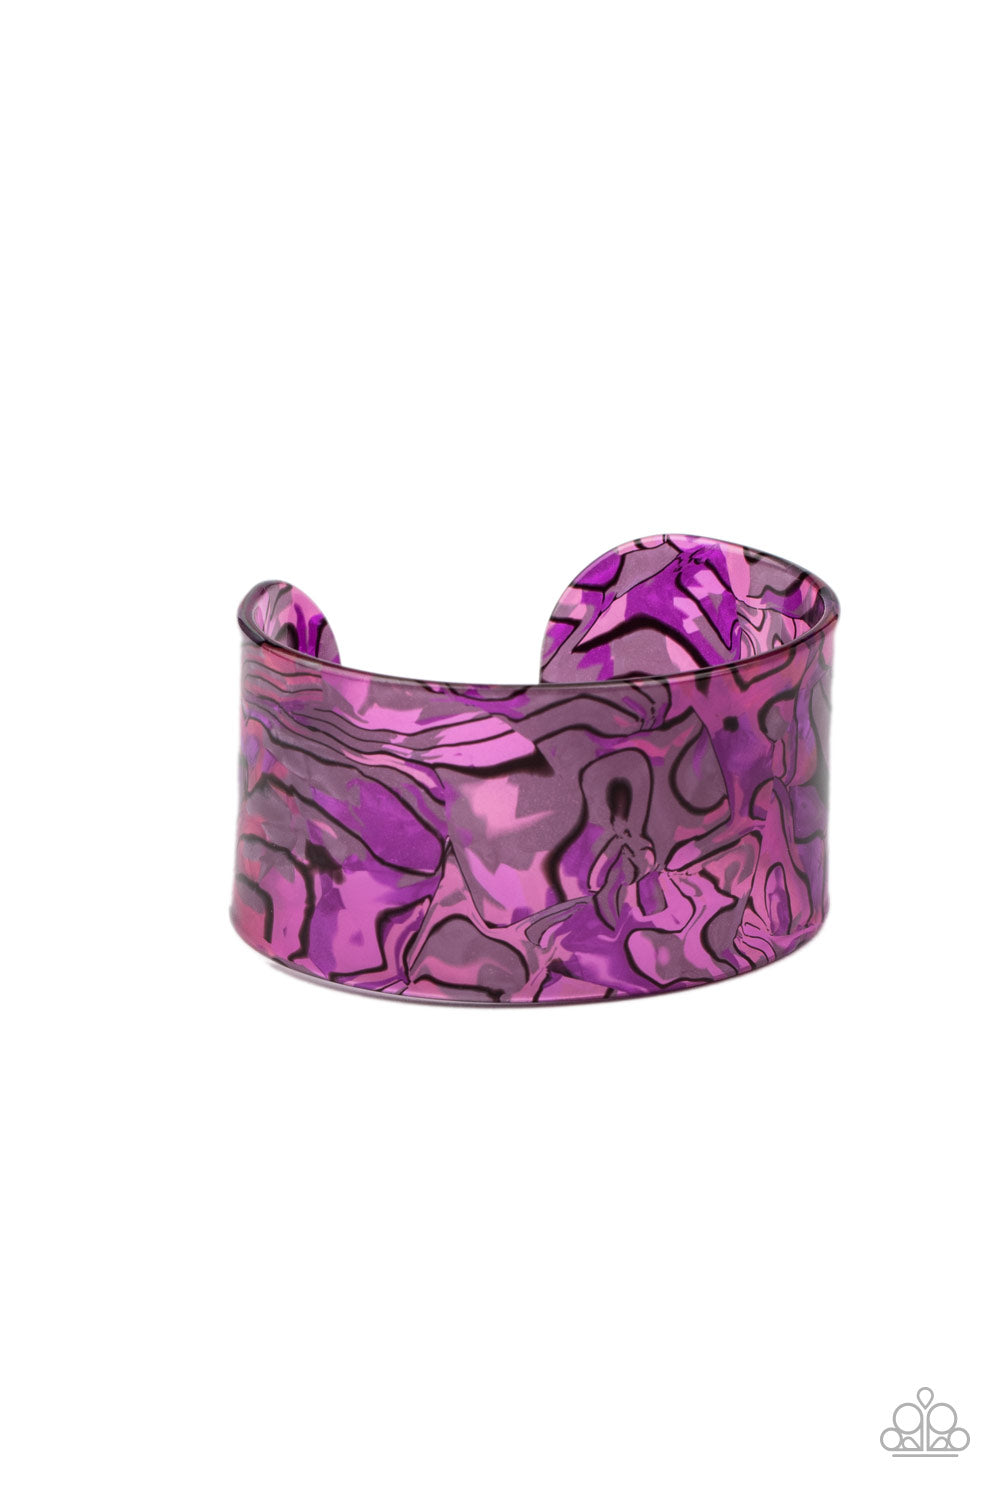 Cosmic Couture - Purple cuff bracelet C012